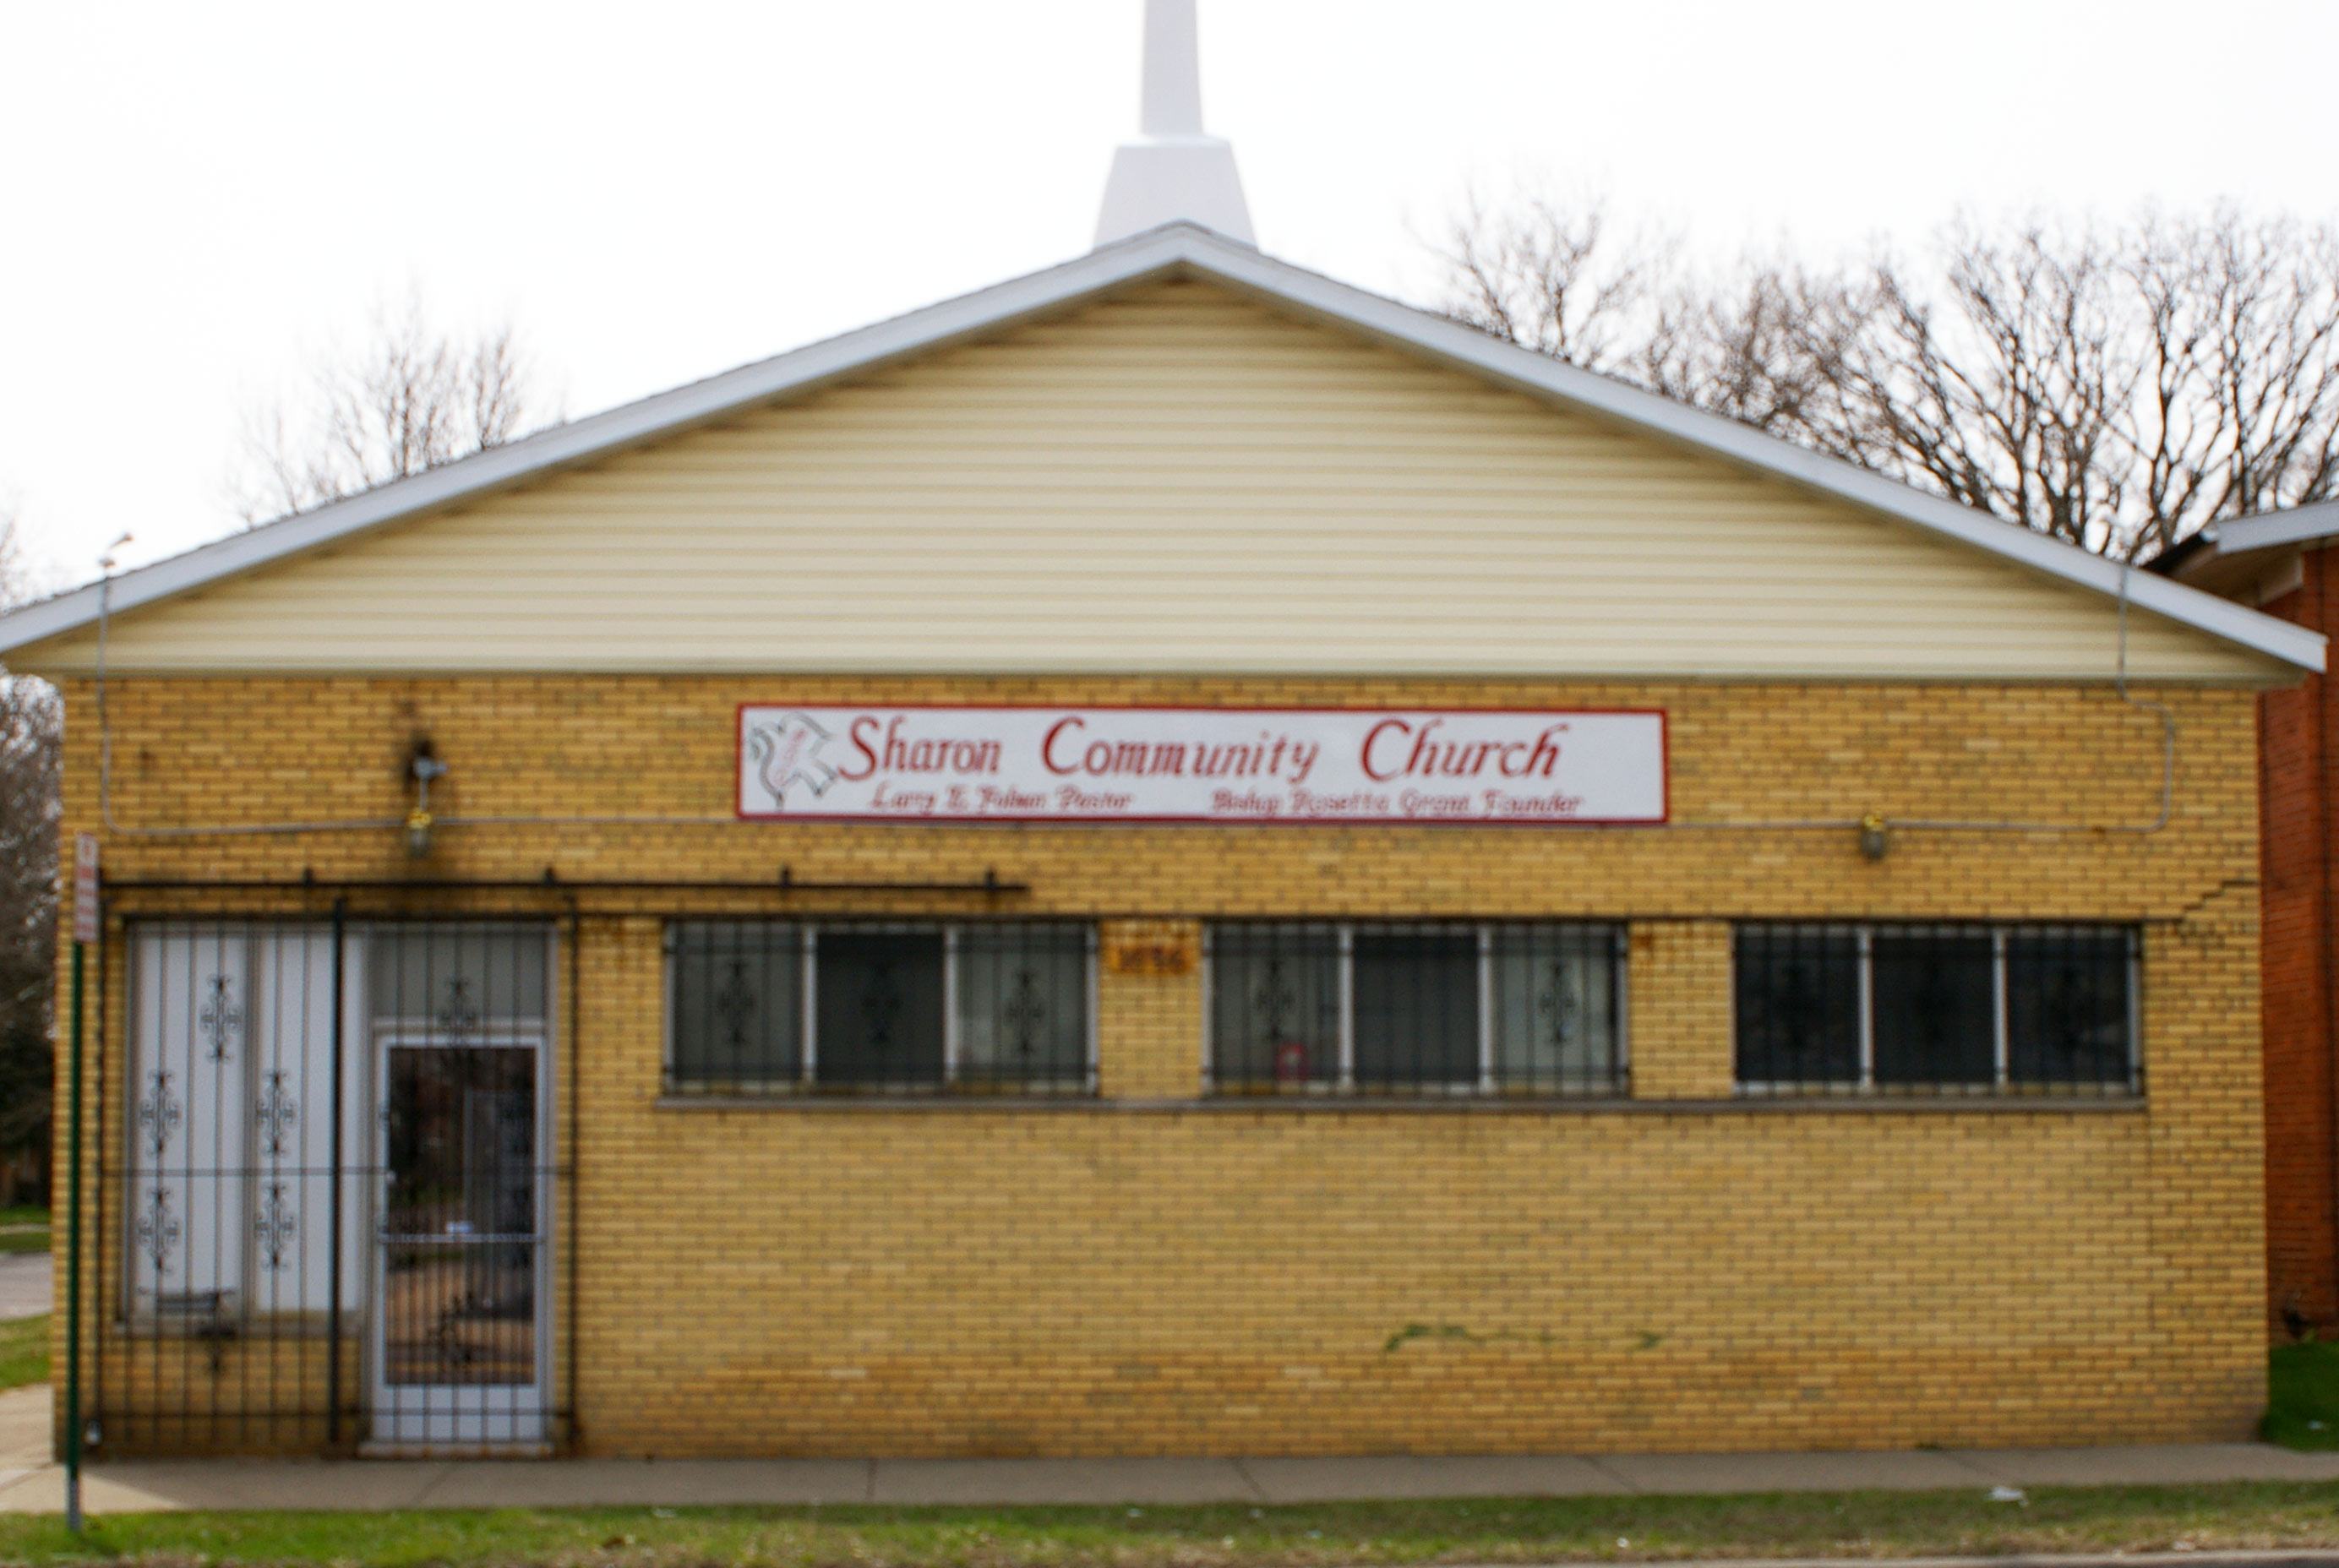 Sharon Community Church